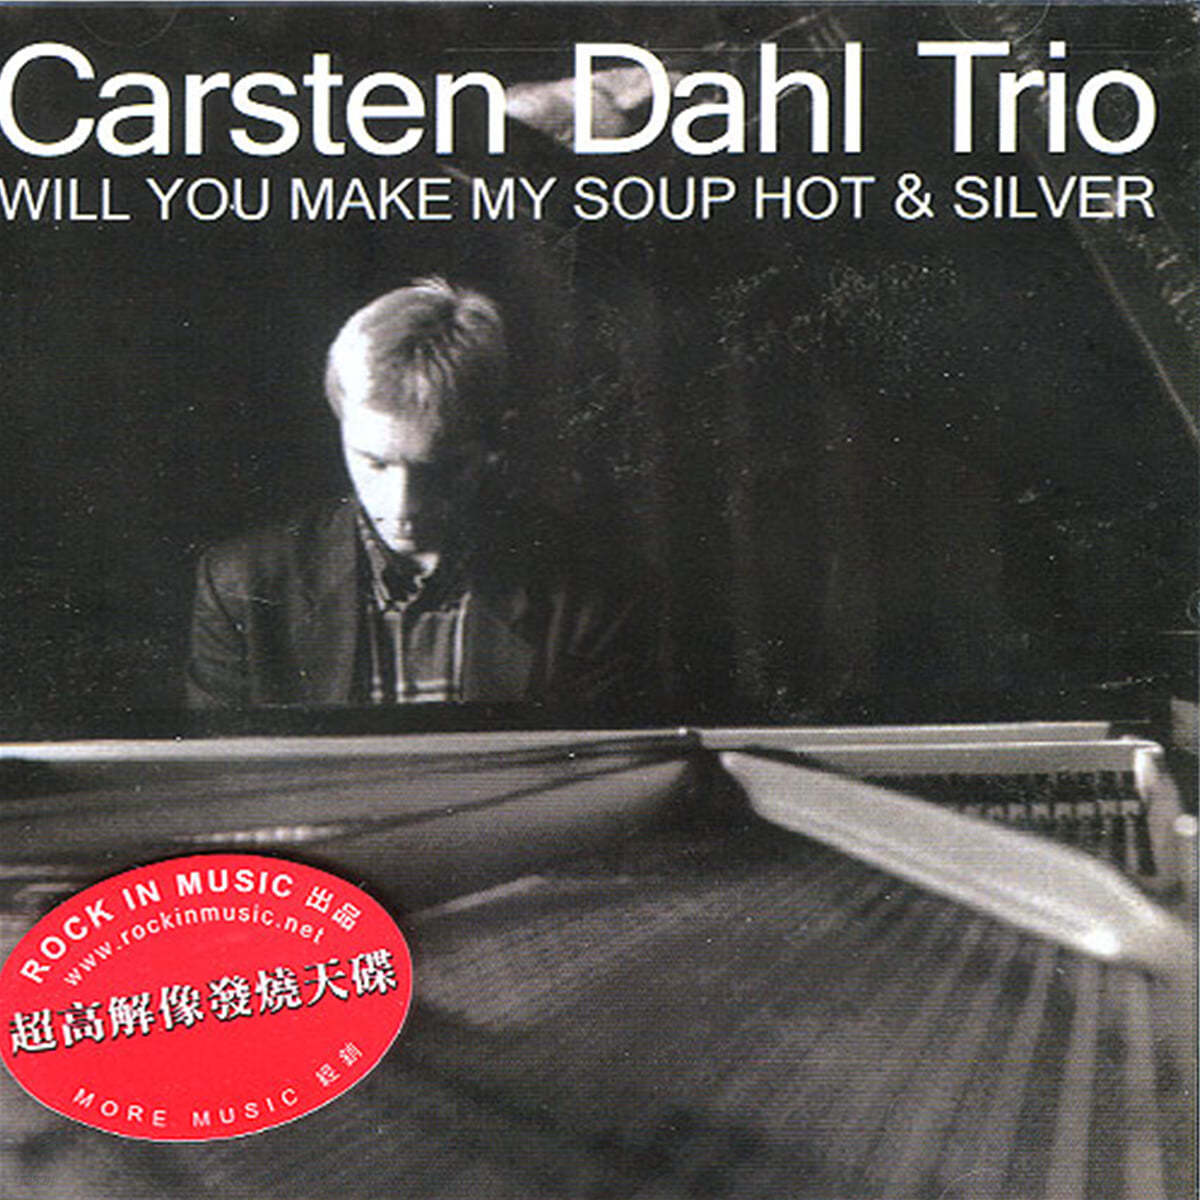 Carsten Dahl Trio (카스텐 달 트리오) - Will You Make My Soup Hot & Silver